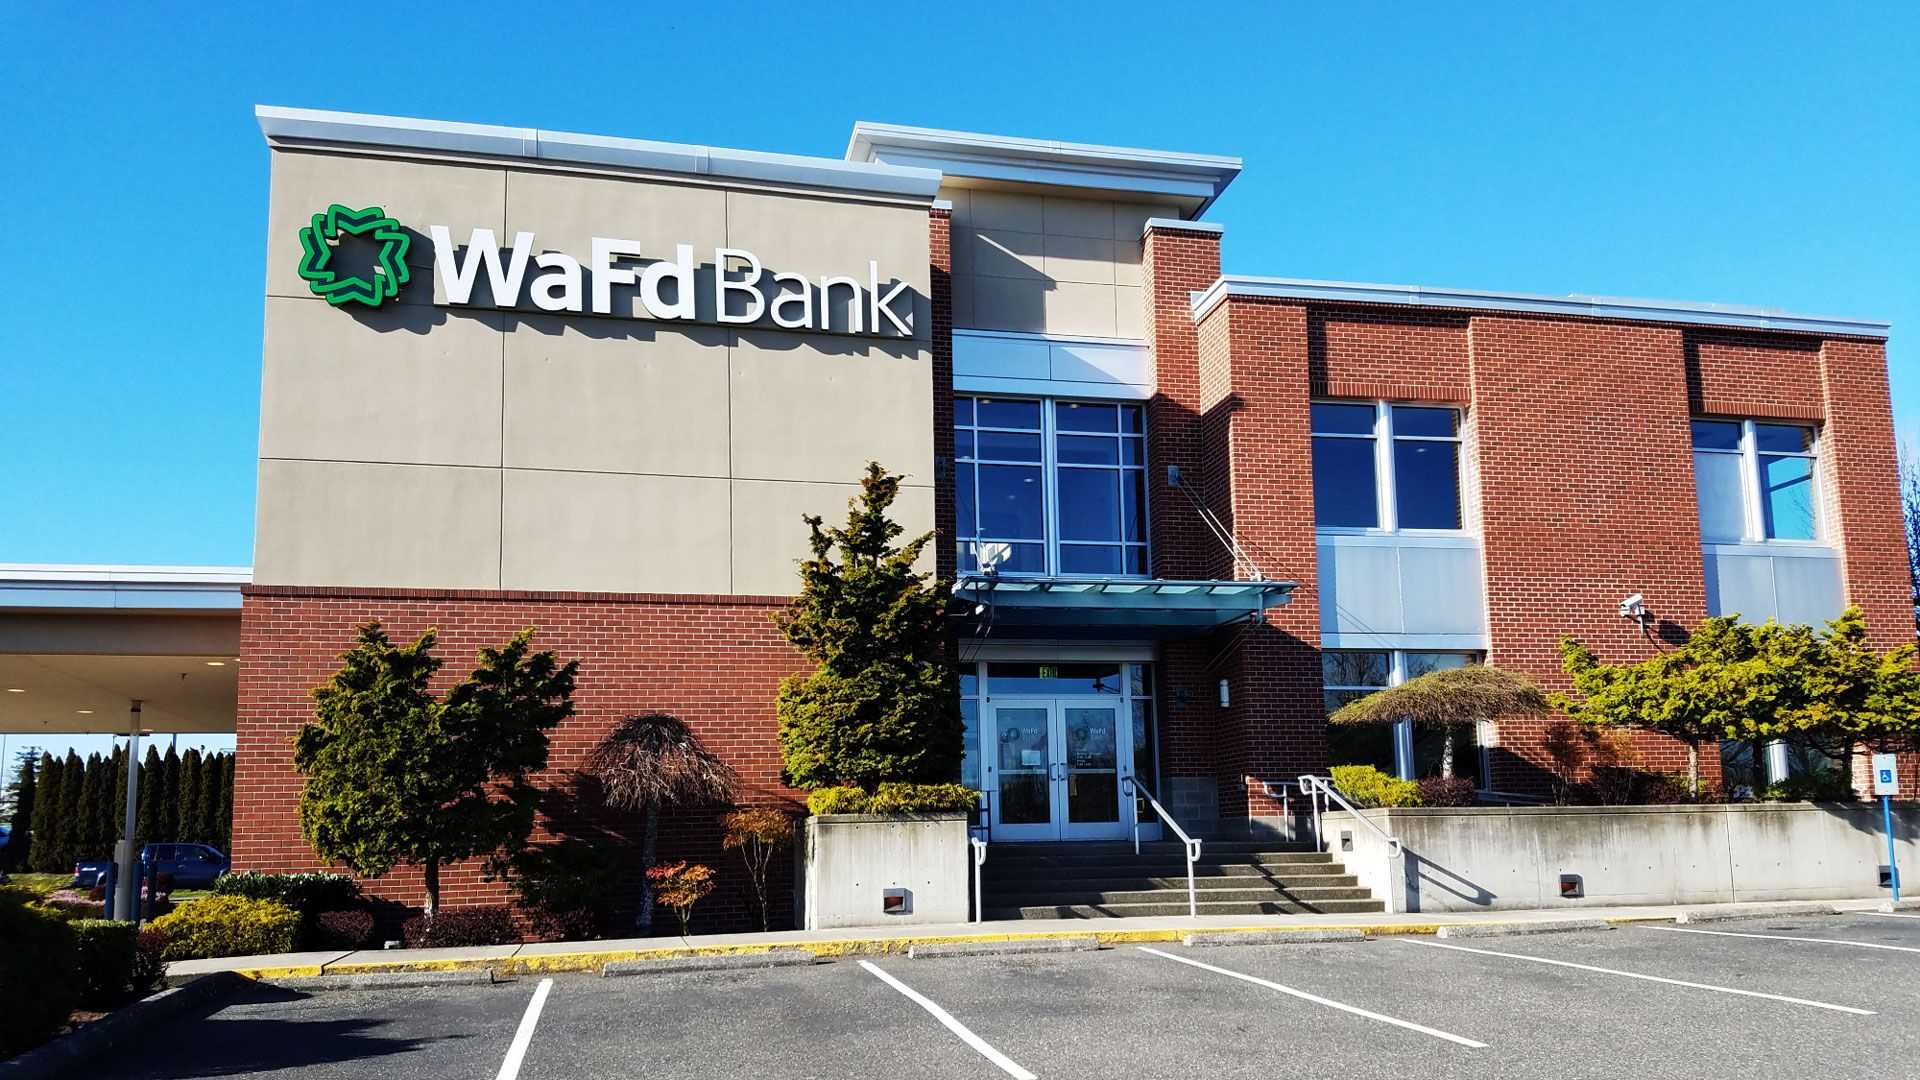 WaFd Bank in Bellingham, Washington #1241 - Washington Federal.